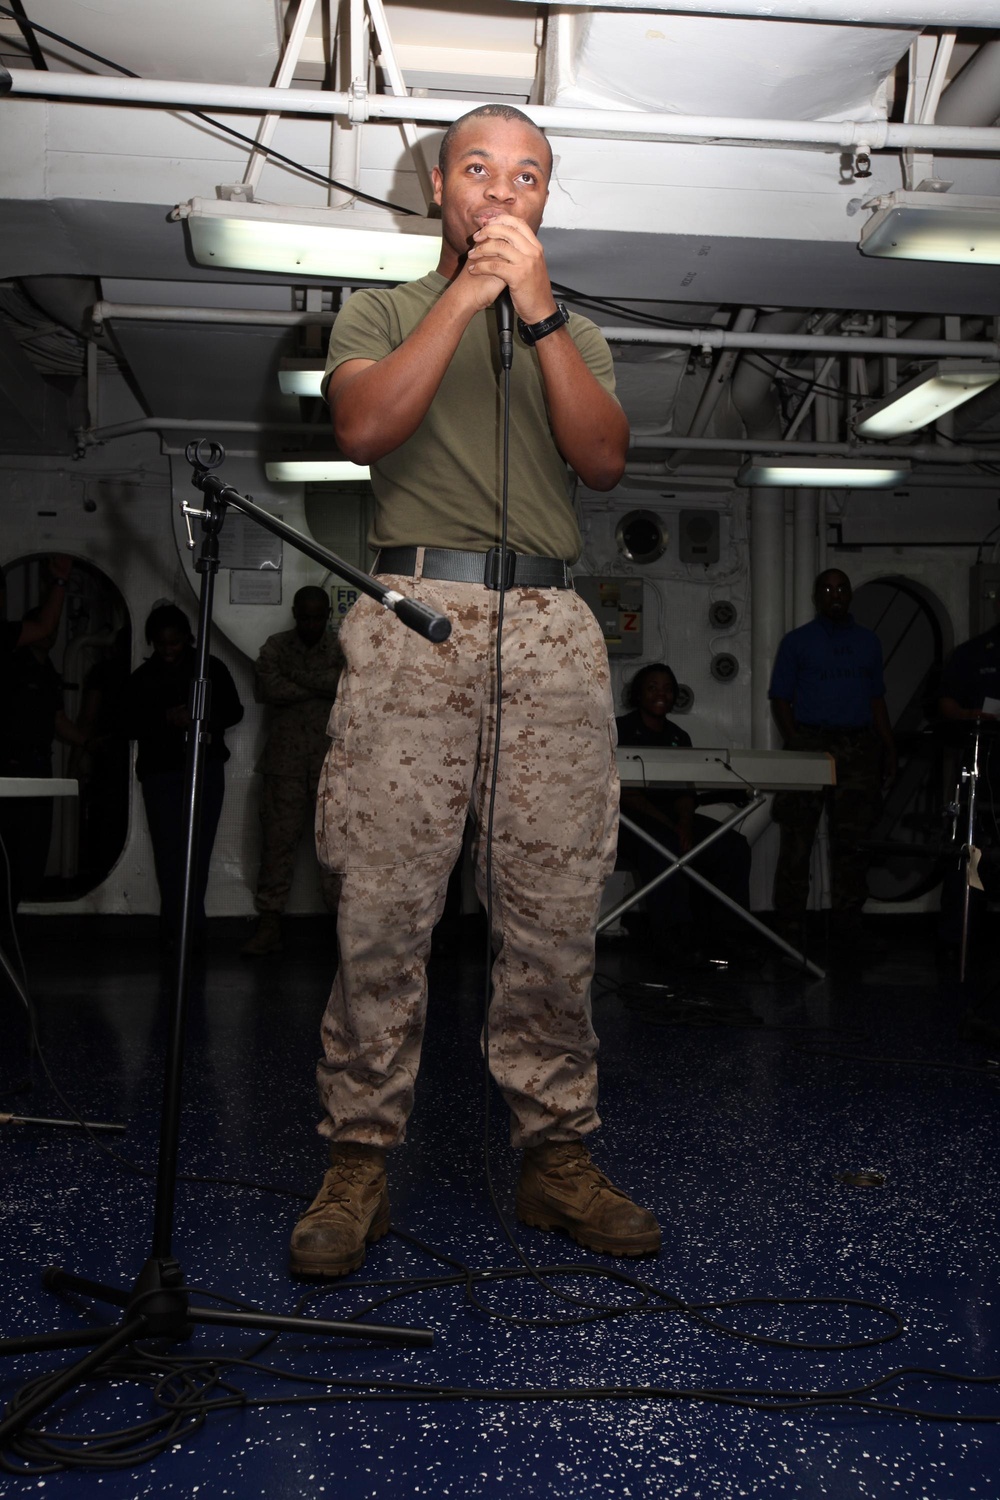 USS Bataan service members showcase talent